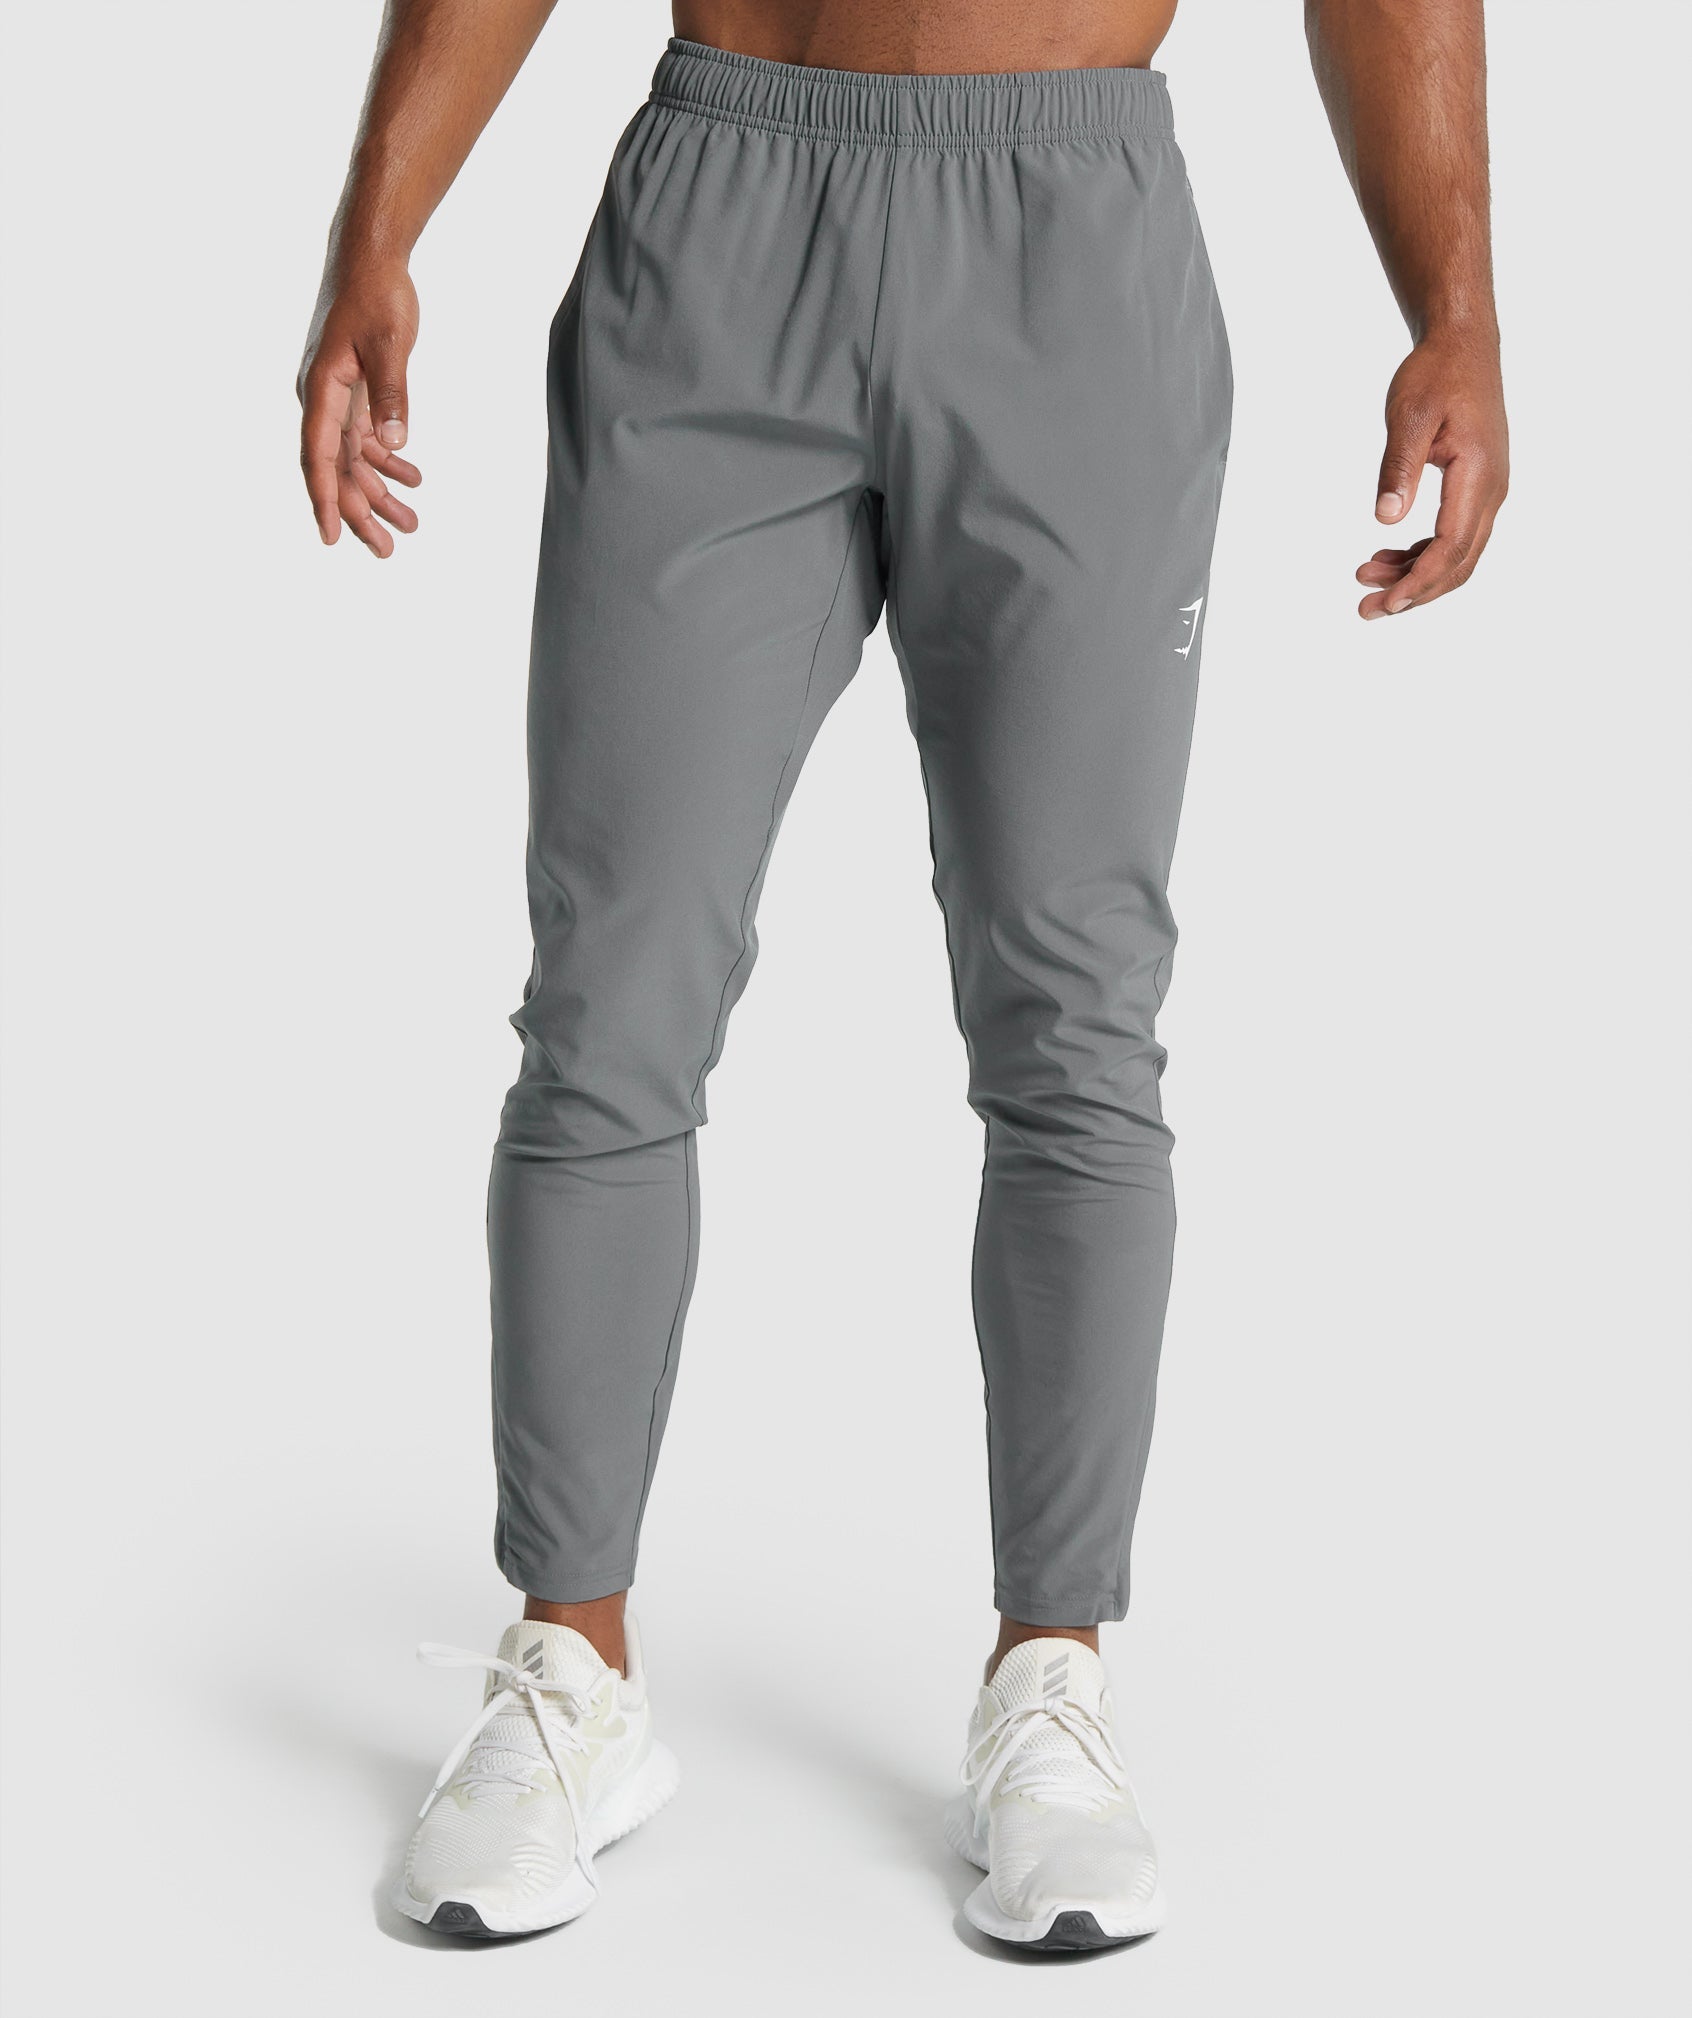 Gymshark 100% Cashmere Sweat Pants for Men